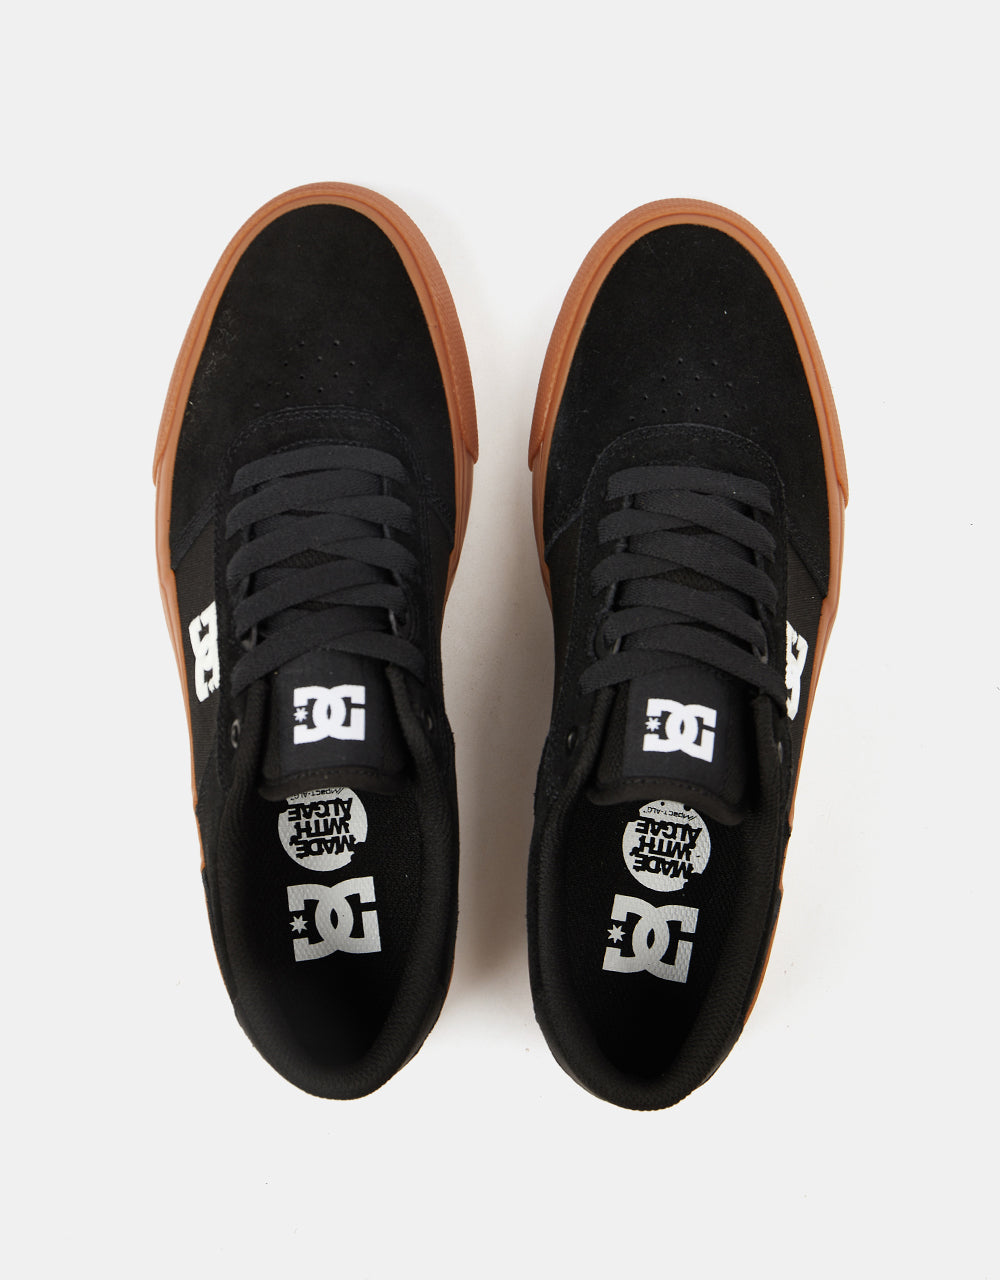 DC Teknic Skate Shoes - Black/Gum